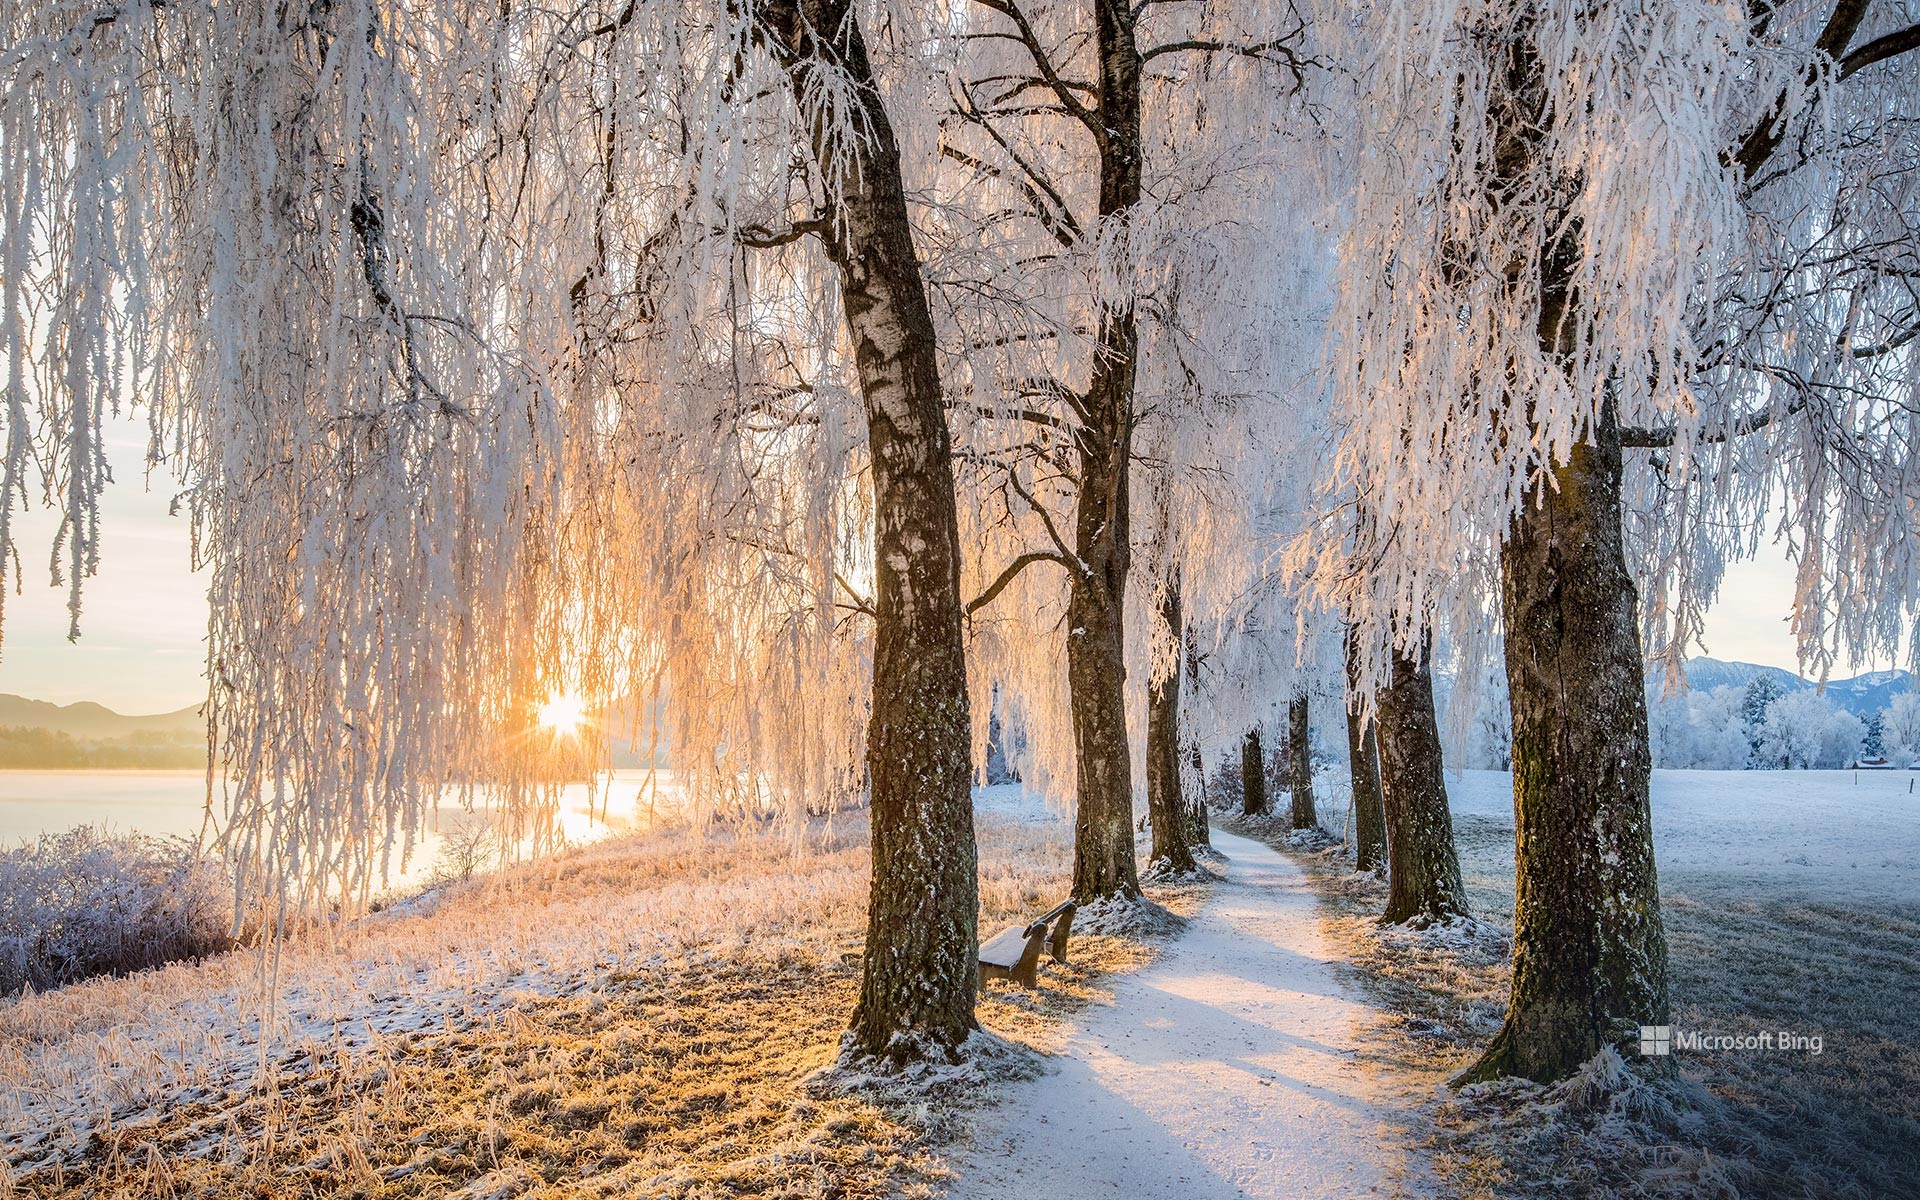 Avenue of birch trees near Uffing am Staffelsee, Bavaria, Germany